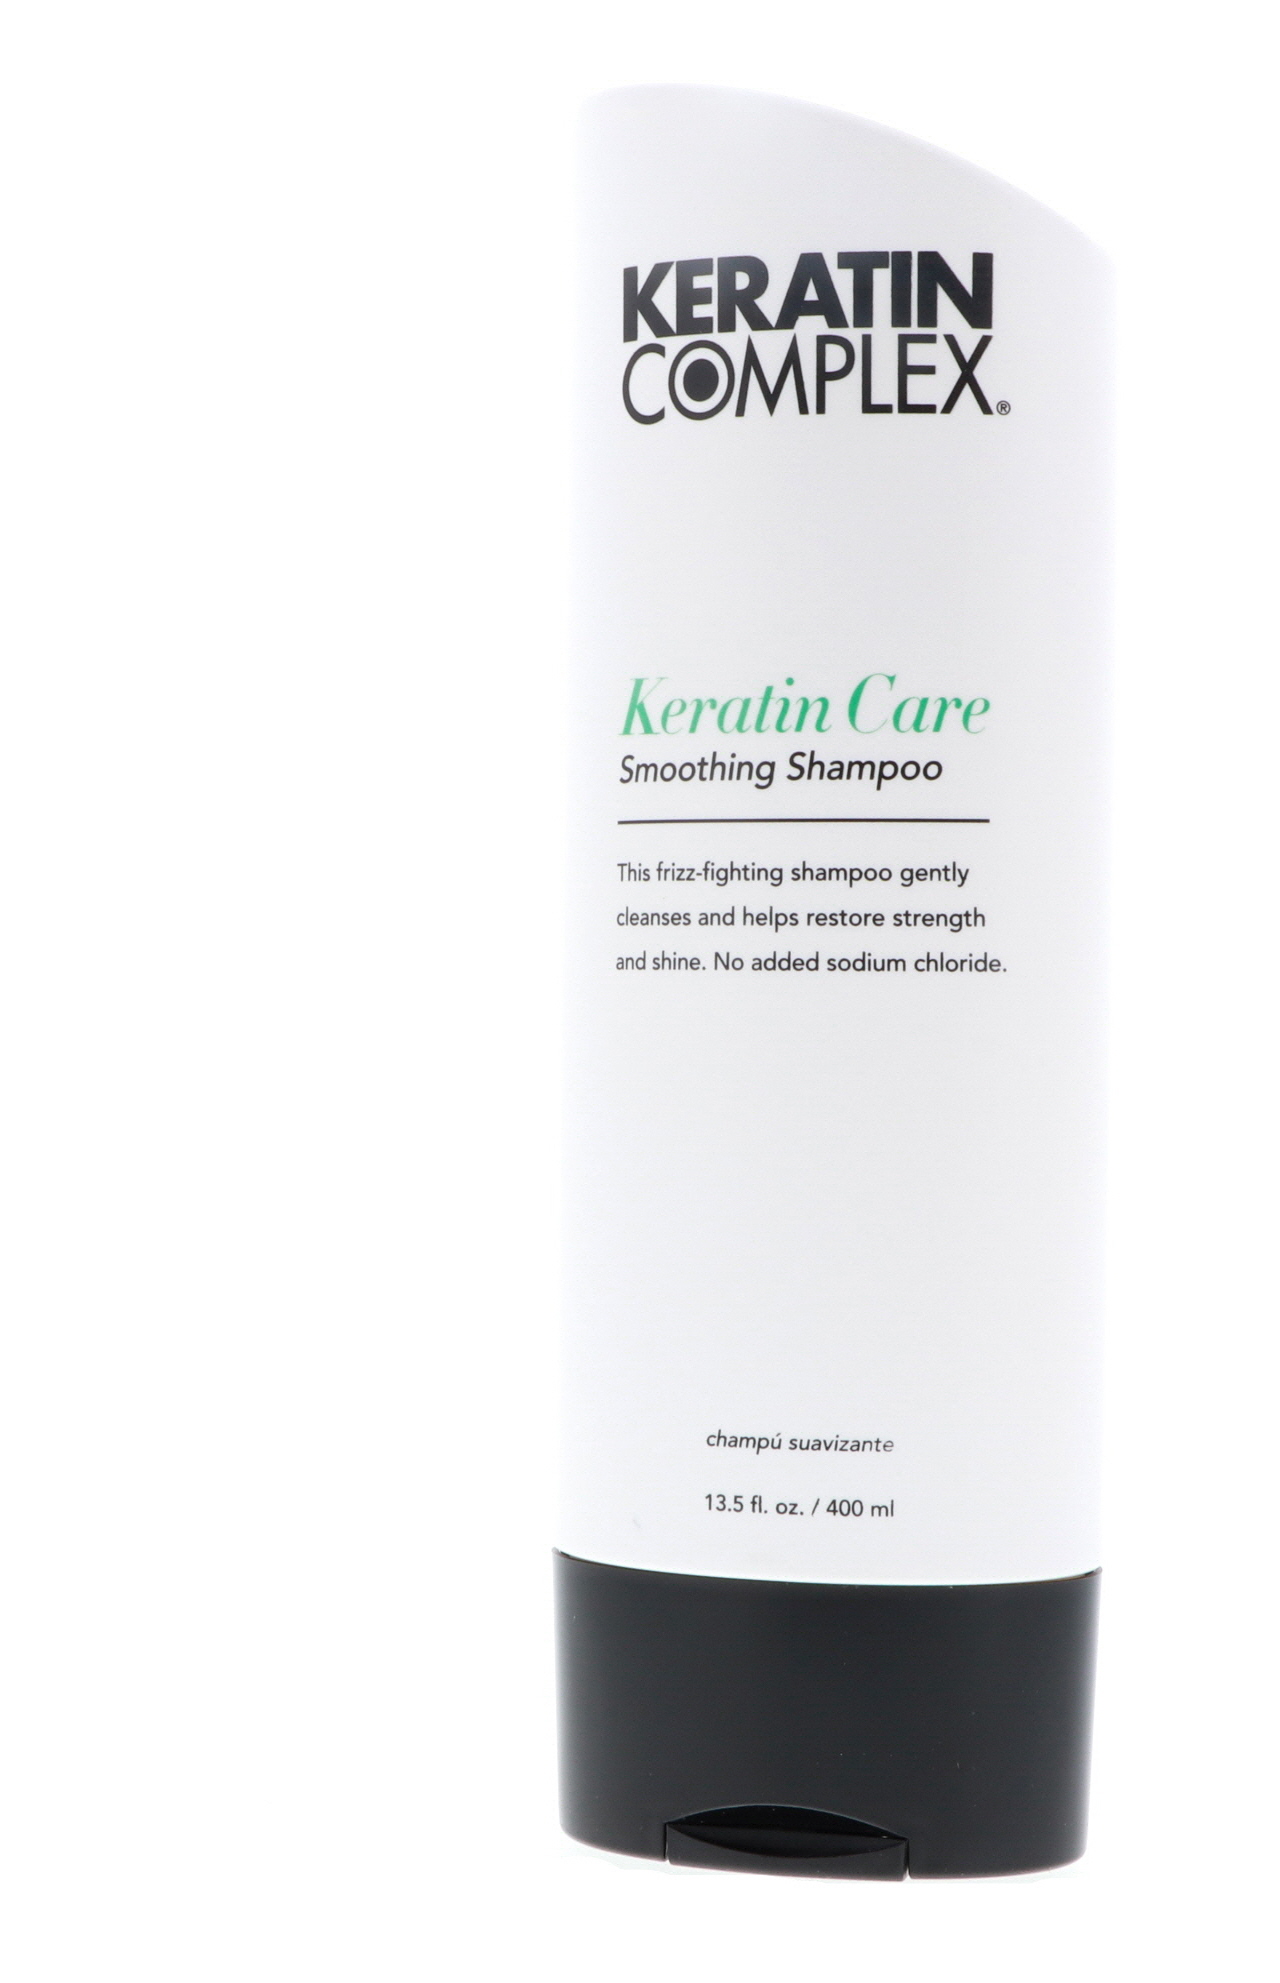 Keratin Complex Keratin Care Smoothing Shampoo, White, 13.5 oz | eBay